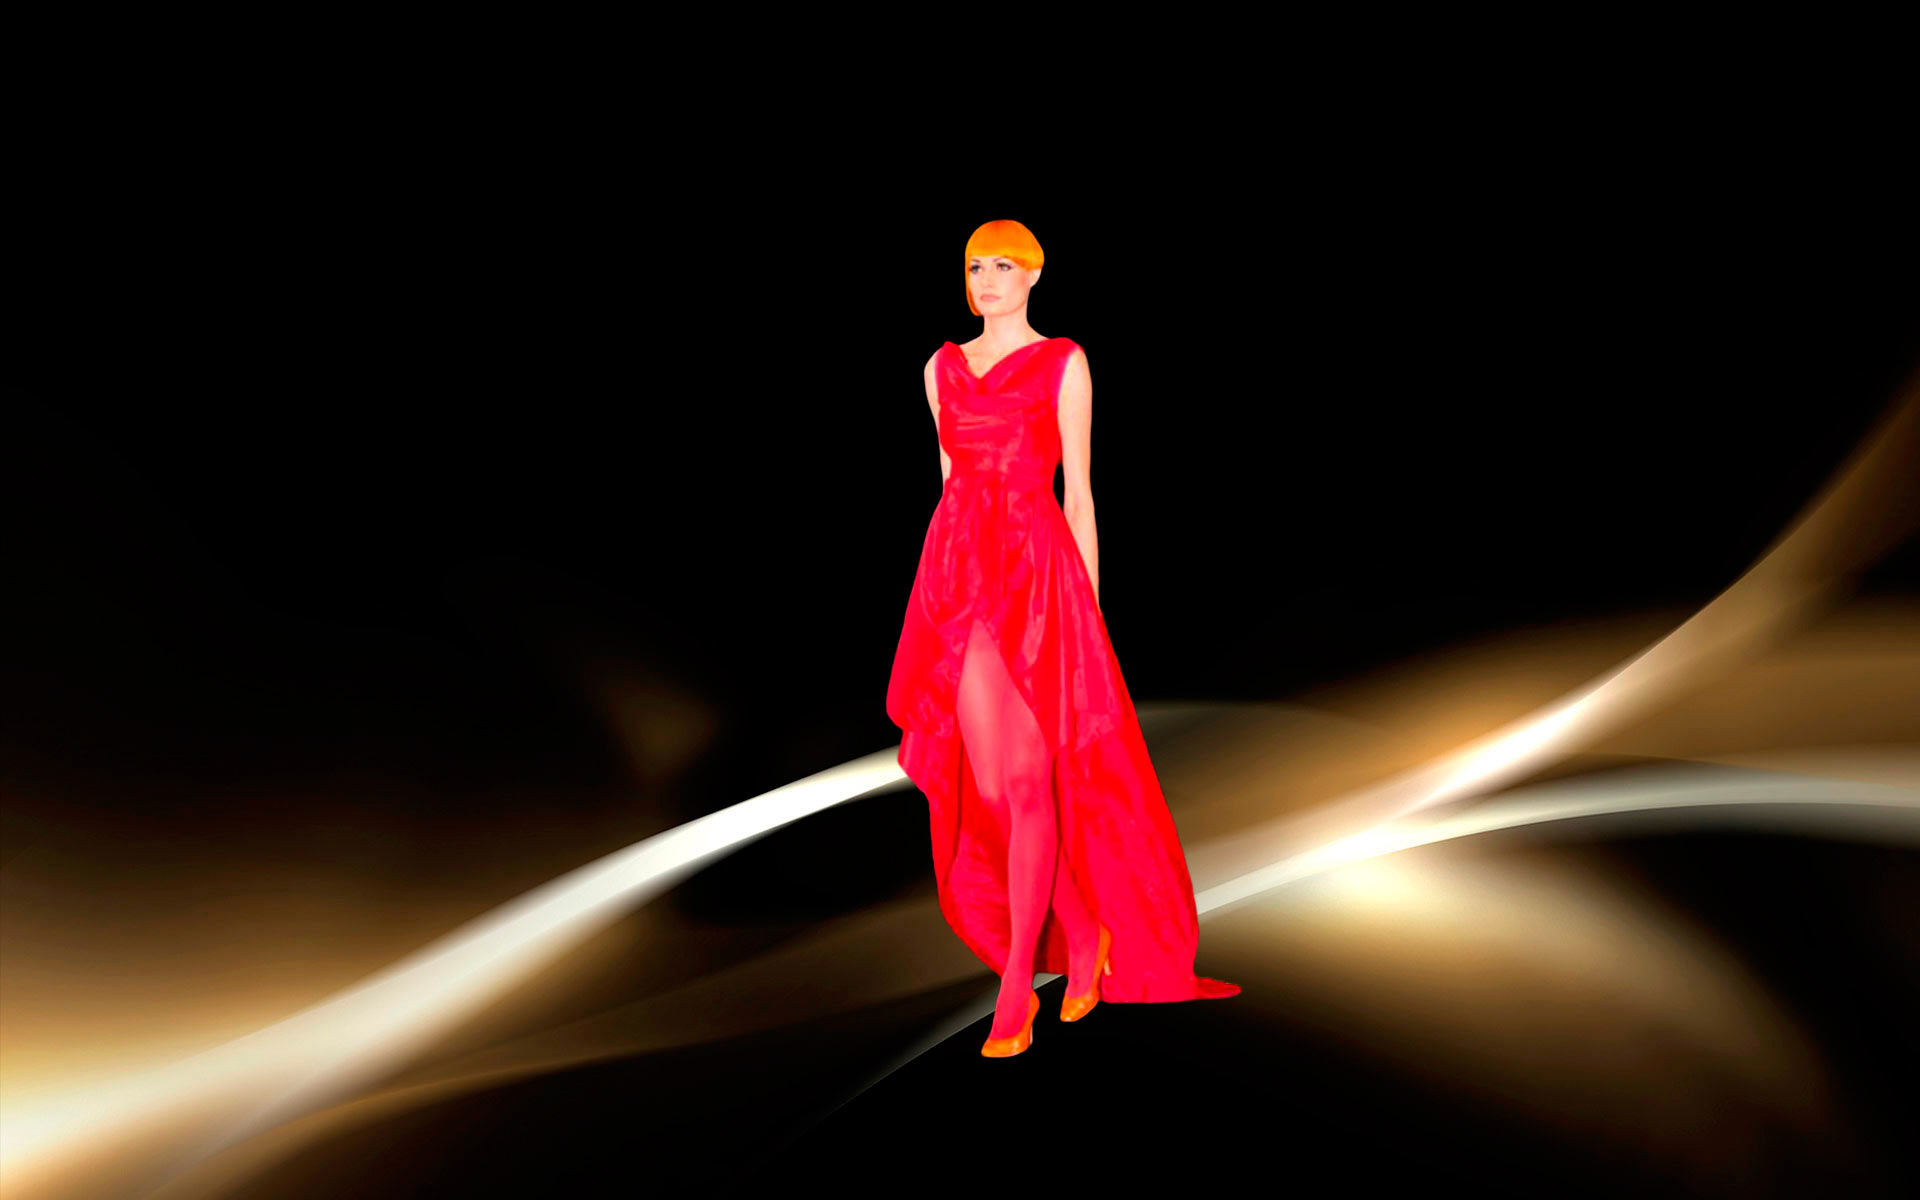 catwalk Italy designer s red dress on Yana Kozyr new face mujer